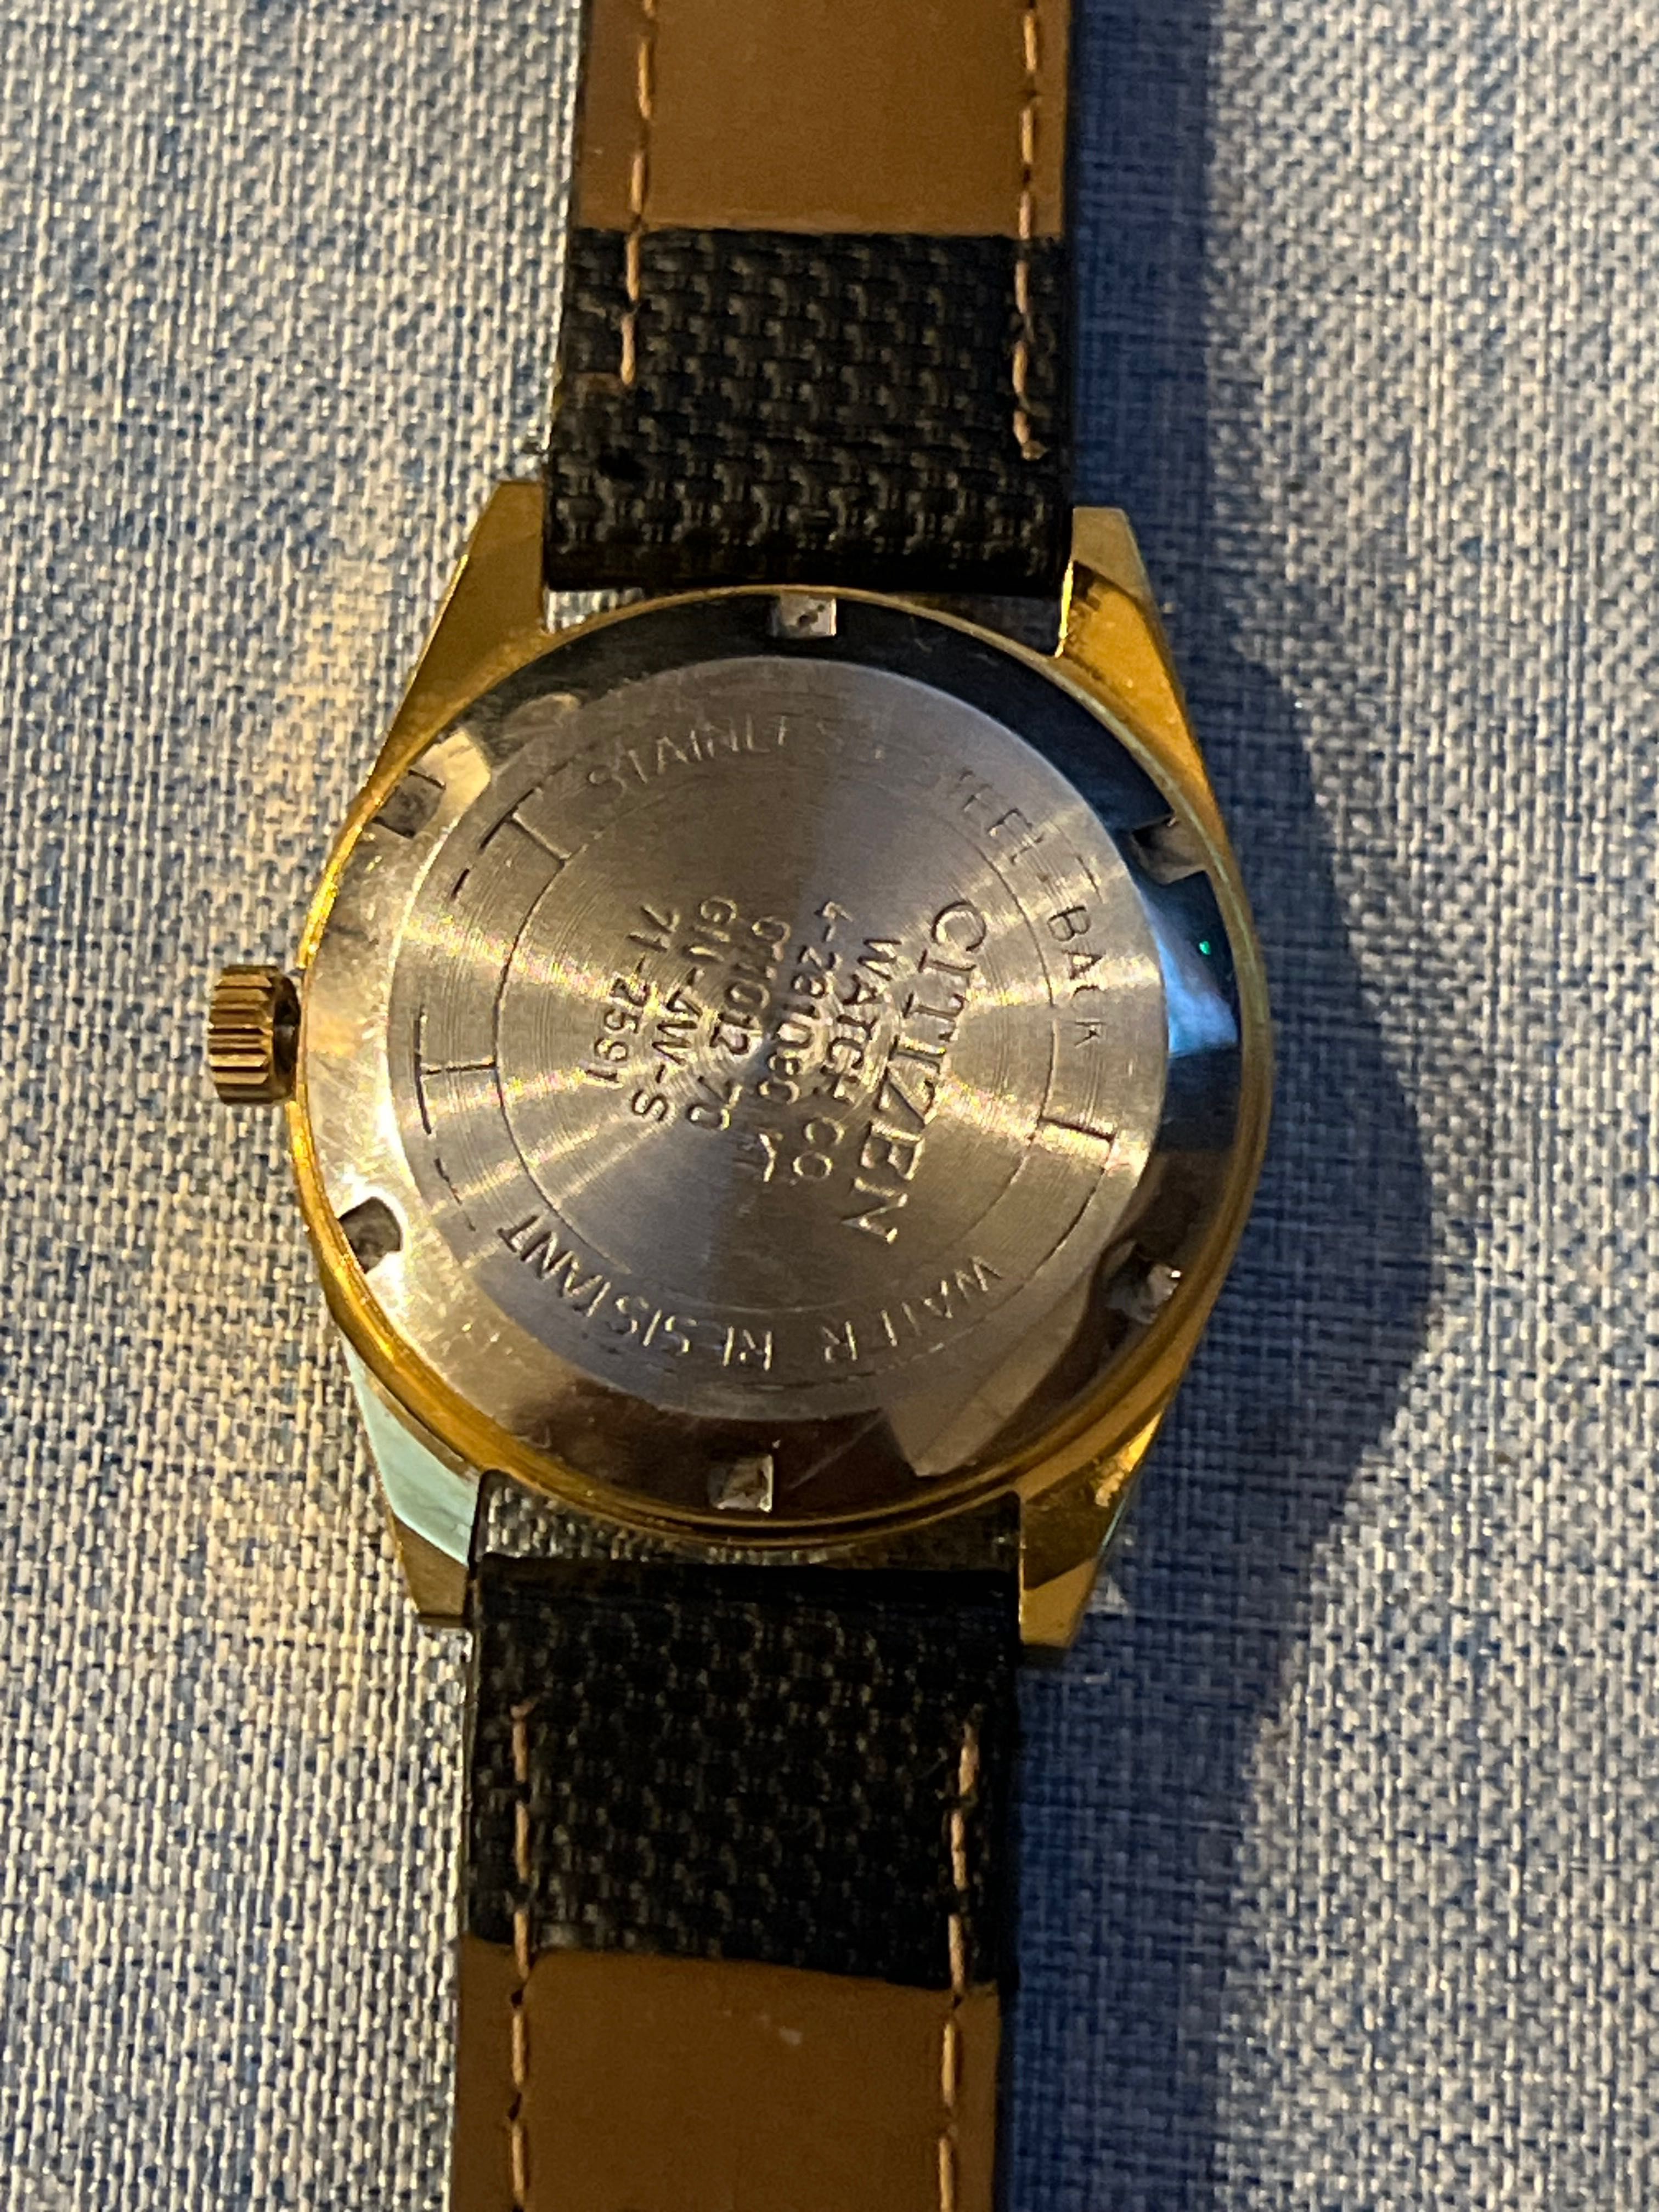 Relógio Citizen Automático original 
dourado modelo estilo Rolex